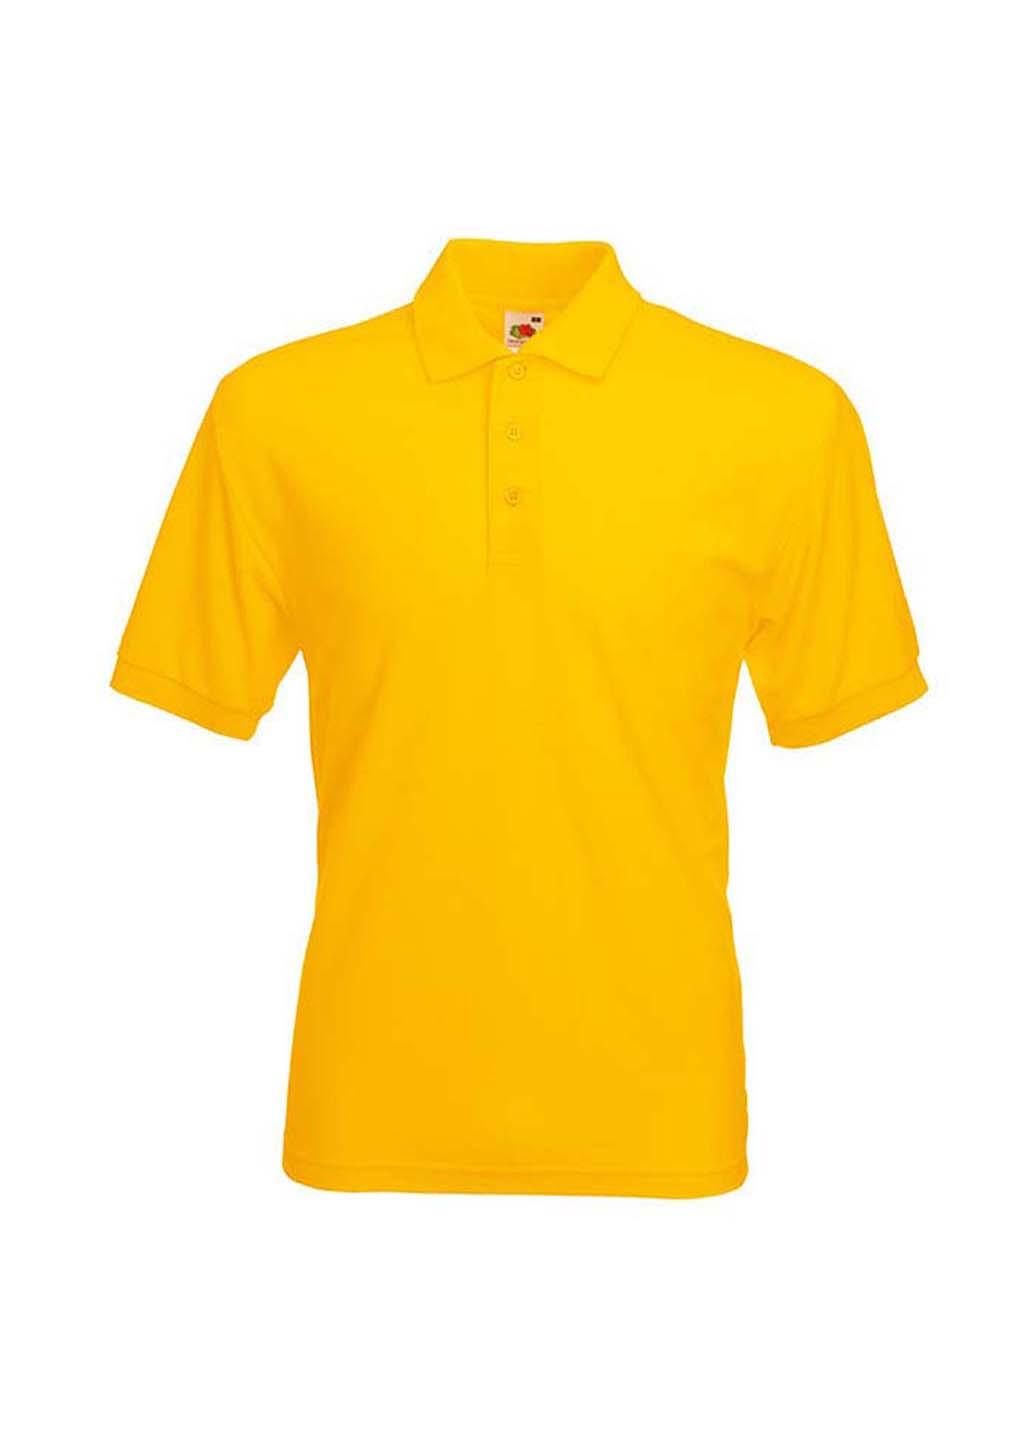 Желтая футболка-поло для мужчин Fruit of the Loom